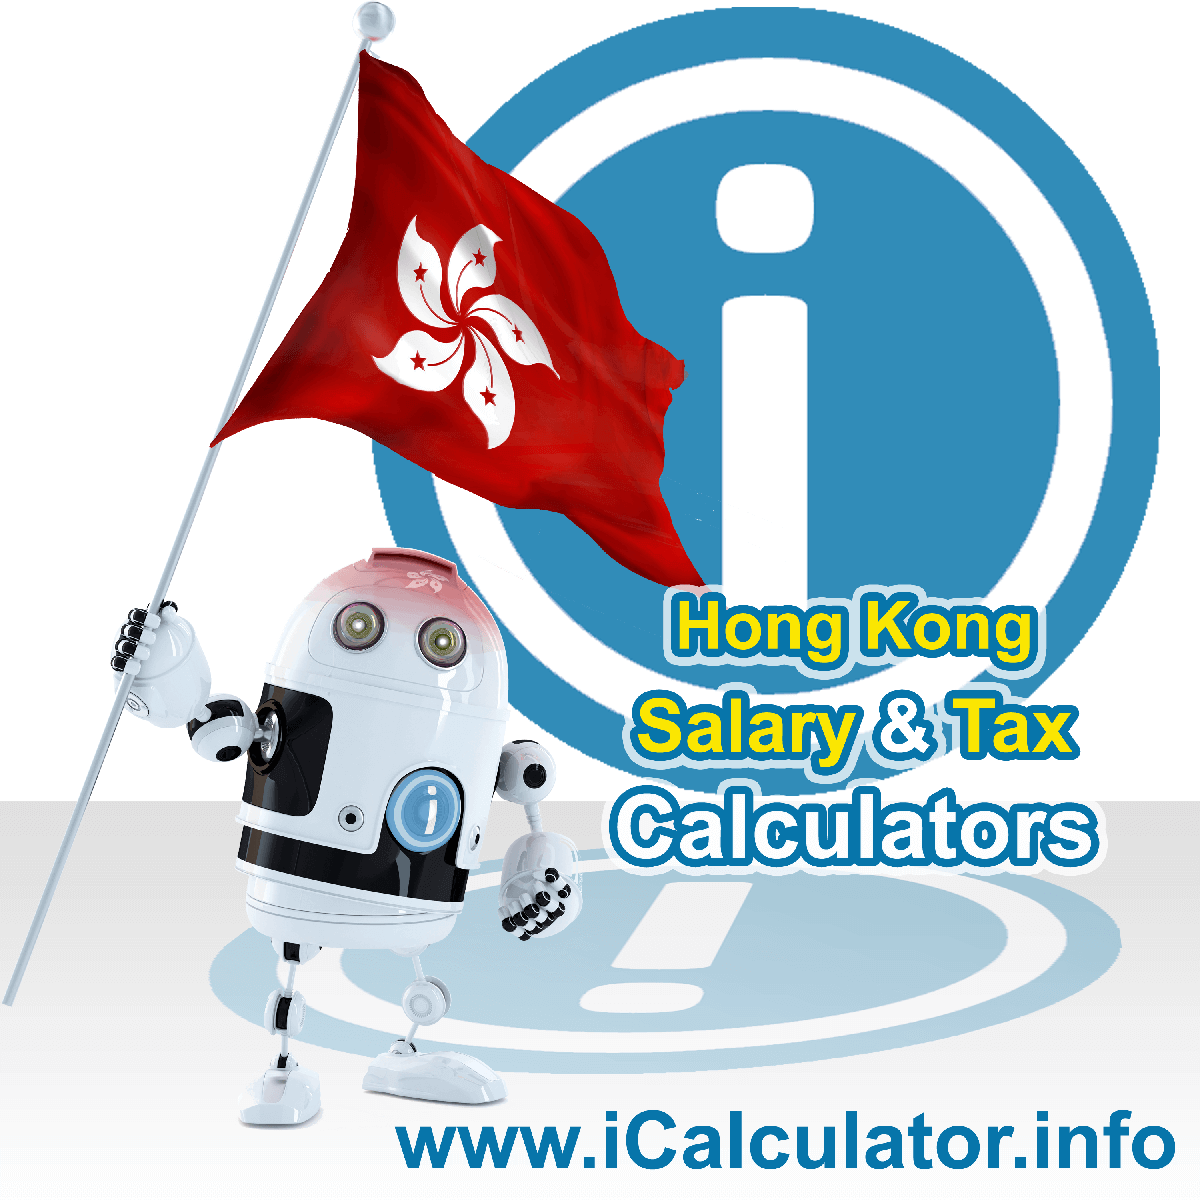 Hong Kong Wage Calculator. This image shows the Hong Kong flag and information relating to the tax formula for the Hong Kong Tax Calculator